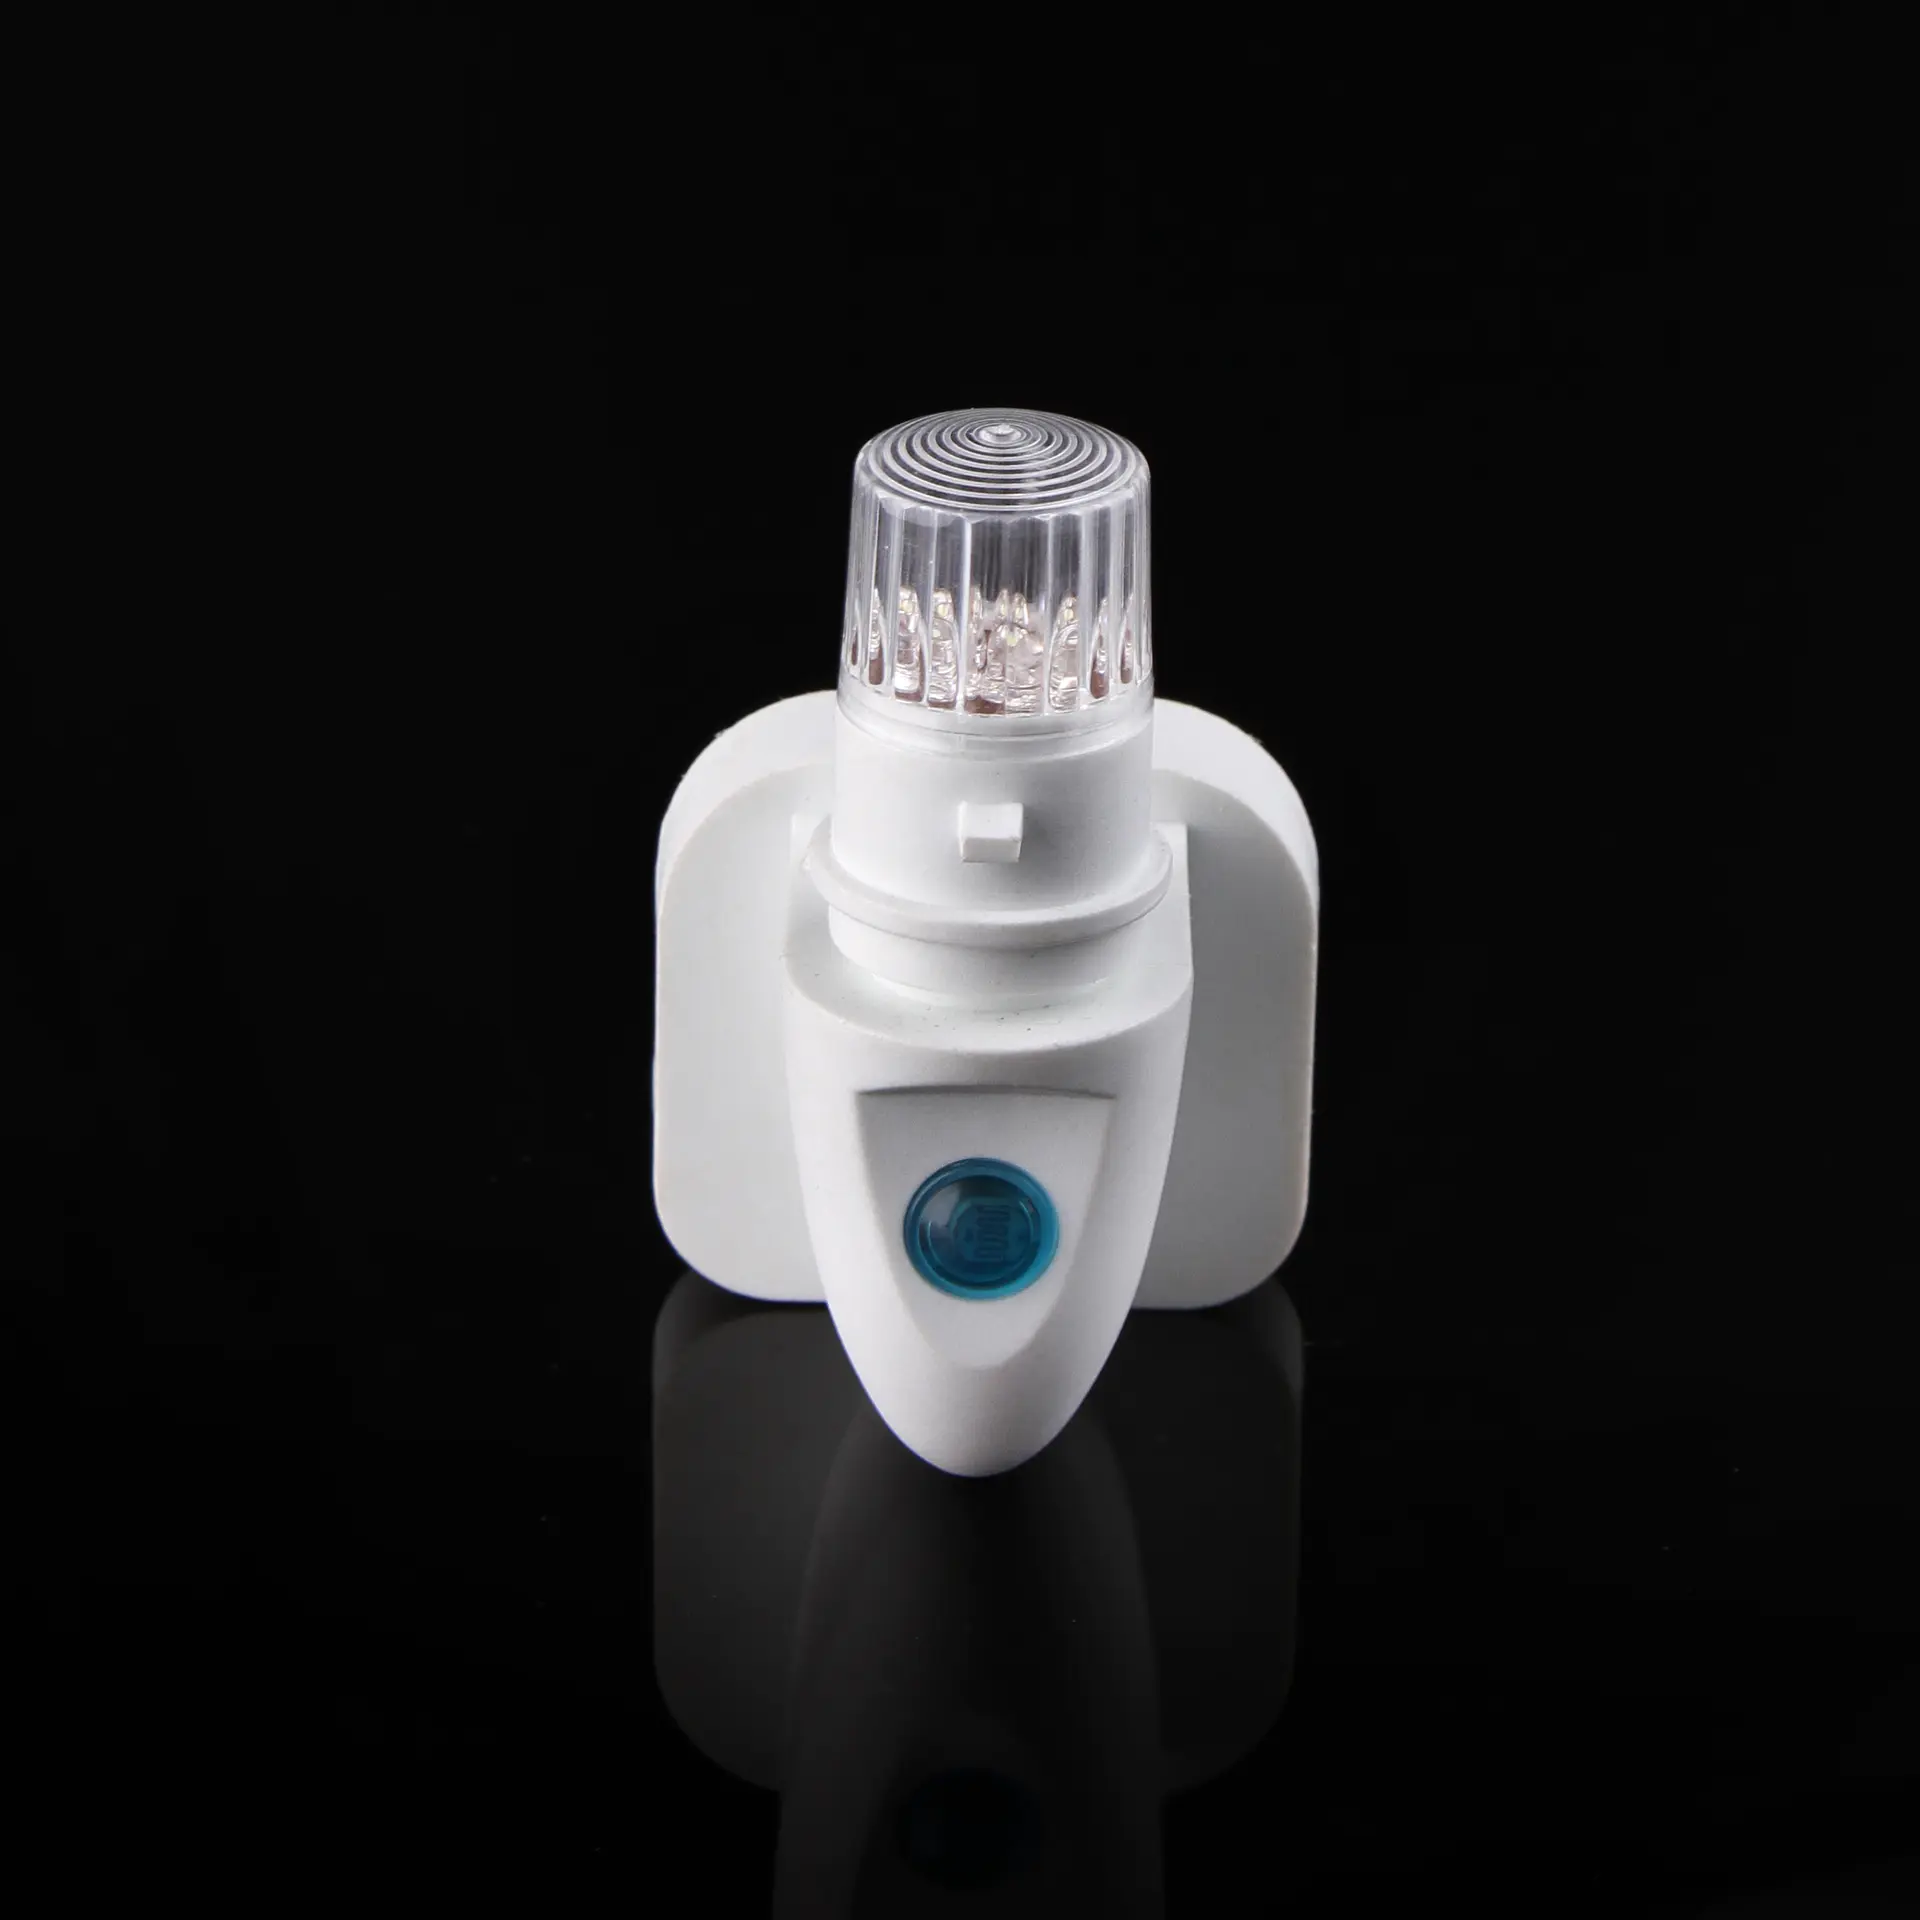 E14 rotating plug CE ROHS approved sensor night light electrical plug socket with European plug in lamp holder and 220V or 240V